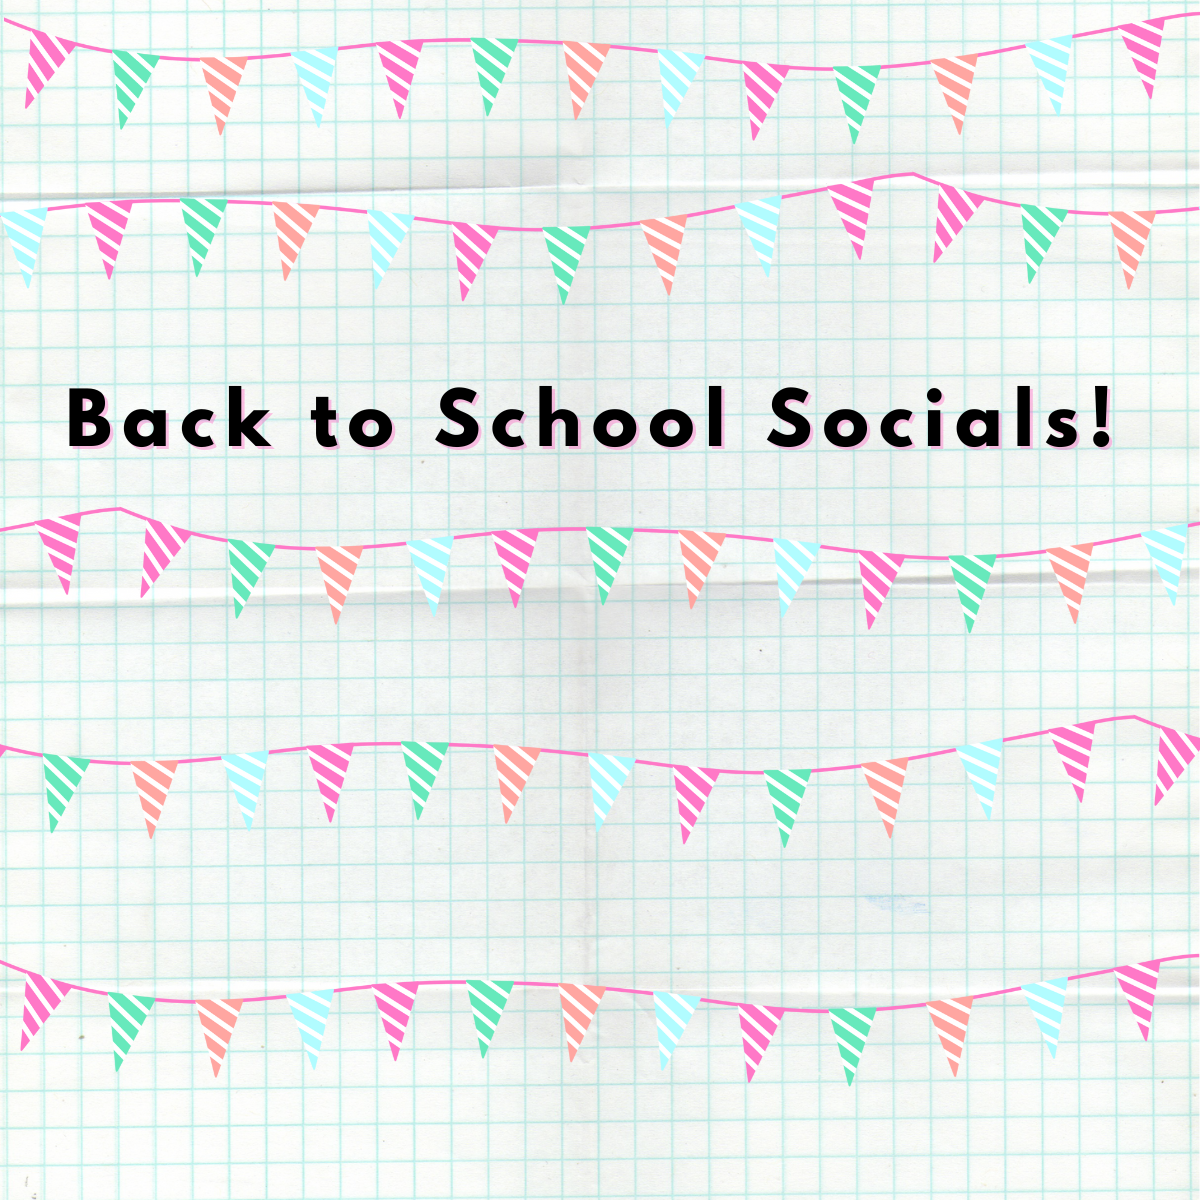 RSVP Now: Back to School Socials!